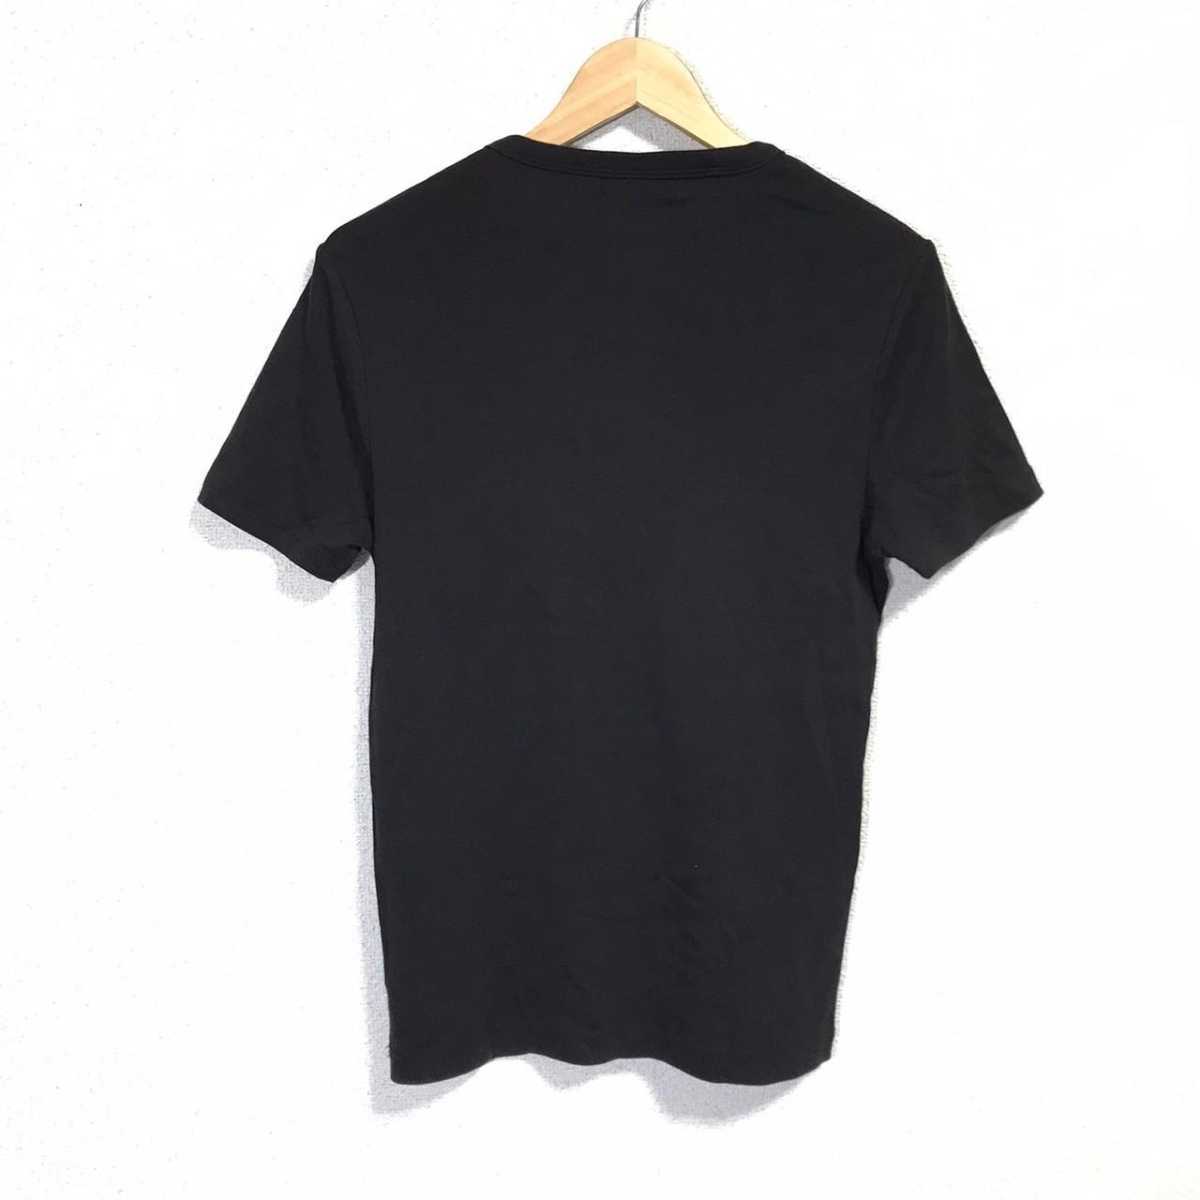 F5249dL《G-STAR RAW ジースターロゥ》サイズM 半袖Tシャツ ロゴTシャツ ブラック 黒 メンズ ユニセックス シンプル ストリート _画像2